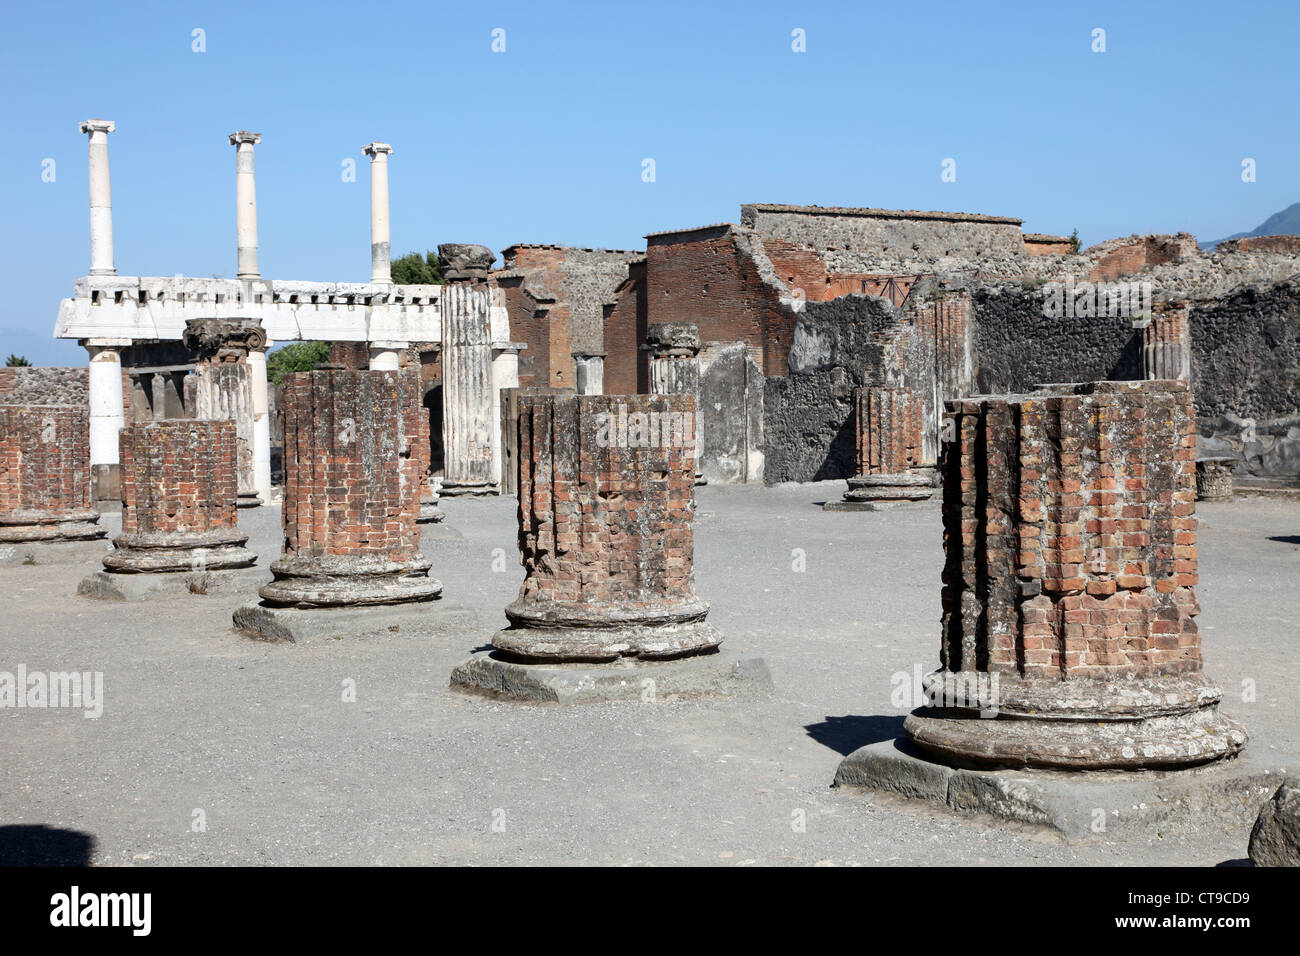 Roman brickwork pillars at Pompeii, city buried under ash from Mount Vesuvius eruption Stock Photo